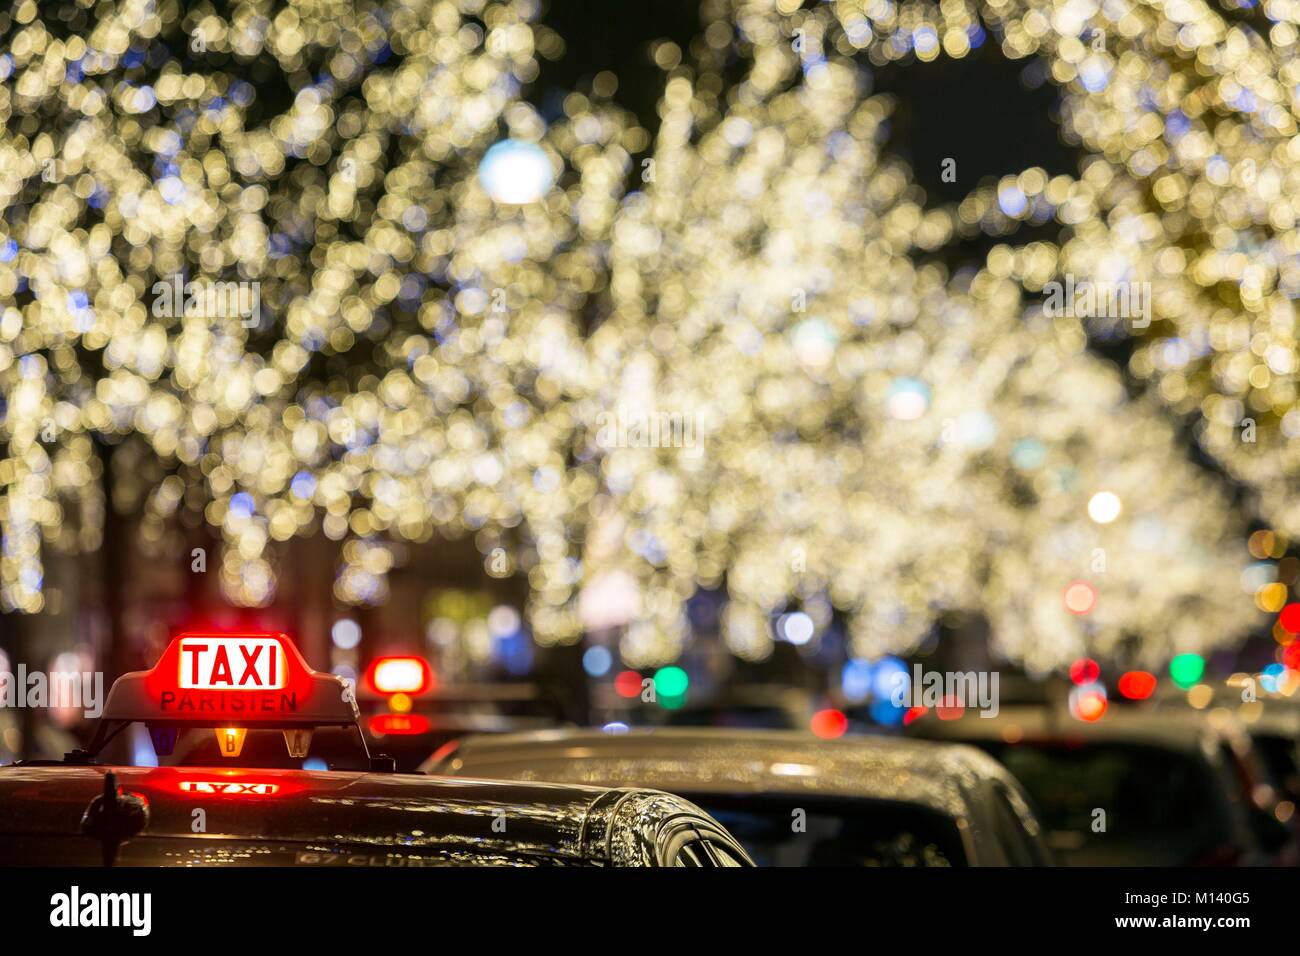 France, Paris, Taxi line Avenue Montaigne and Christmas lights Stock Photo